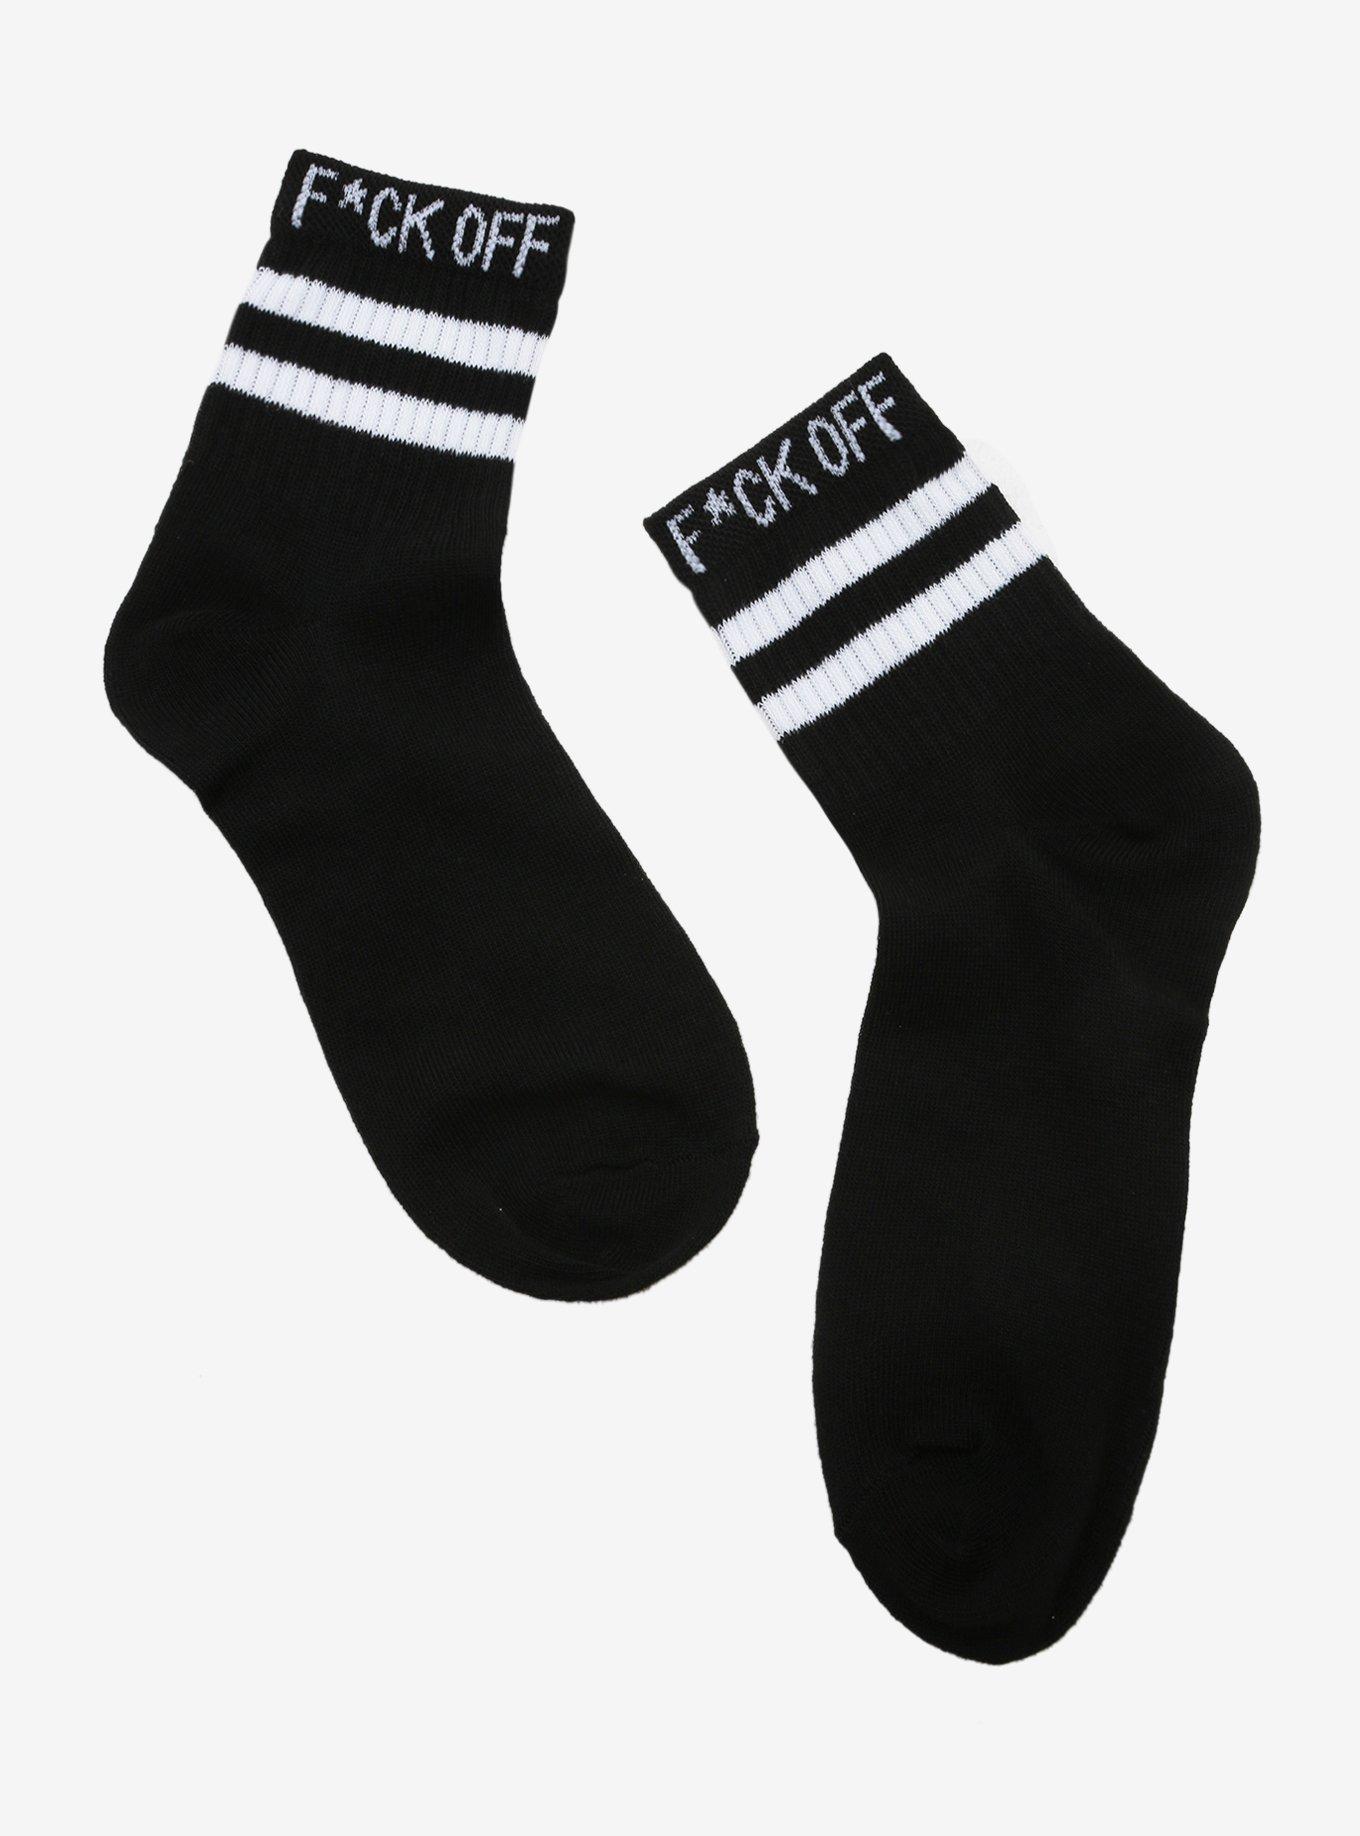 F*ck Off Black & White Varisty Stripe Ankle Socks | Hot Topic